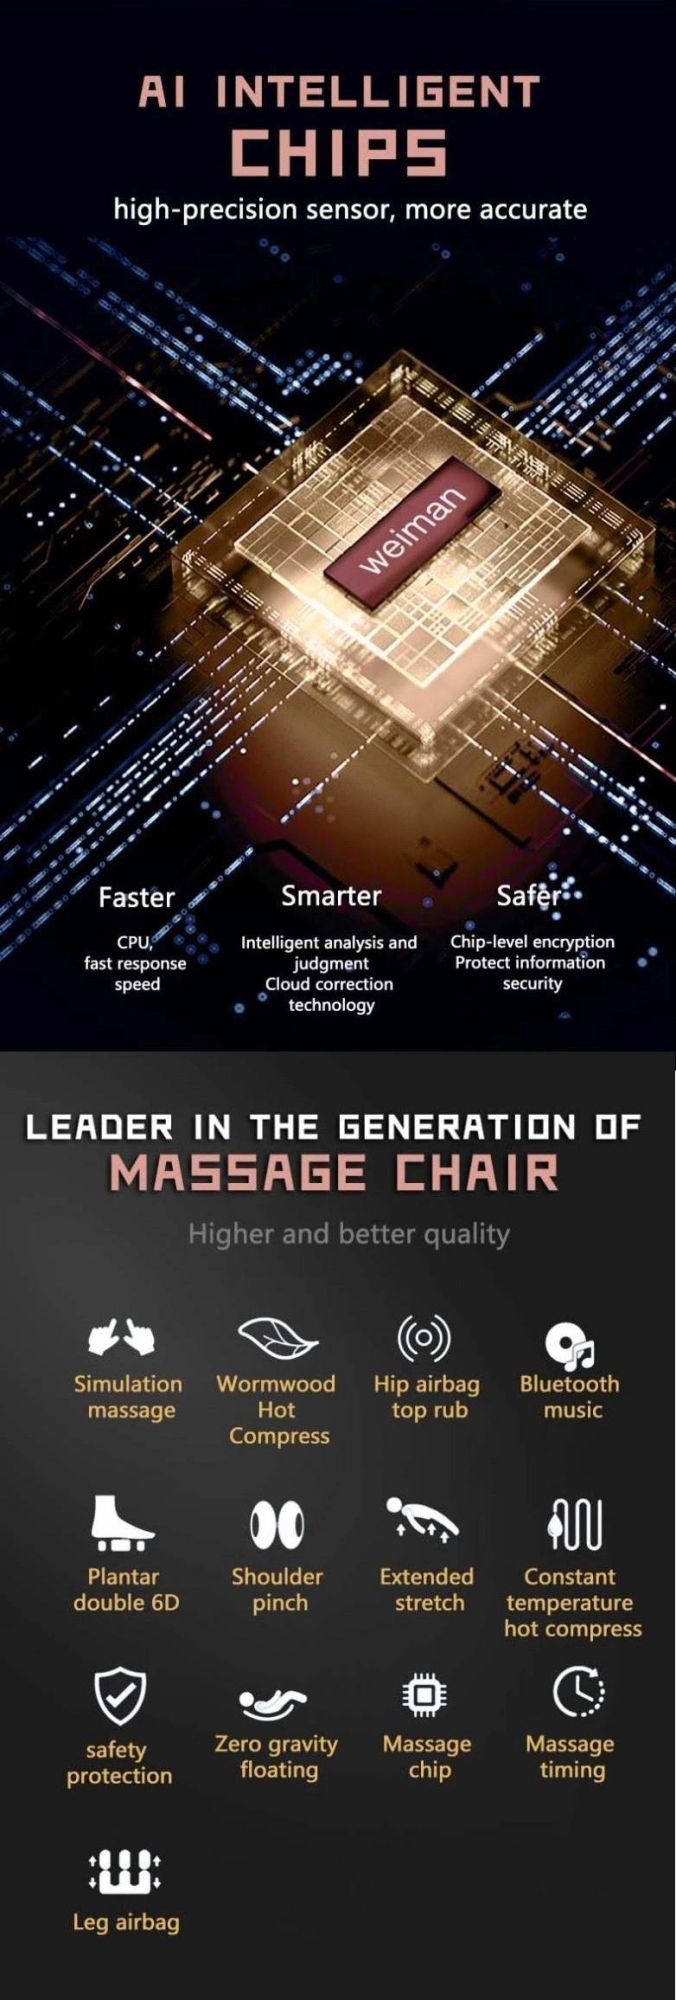 2021 Best Seller Massager Electric Full Body Massage Chair with U Shape Pillow